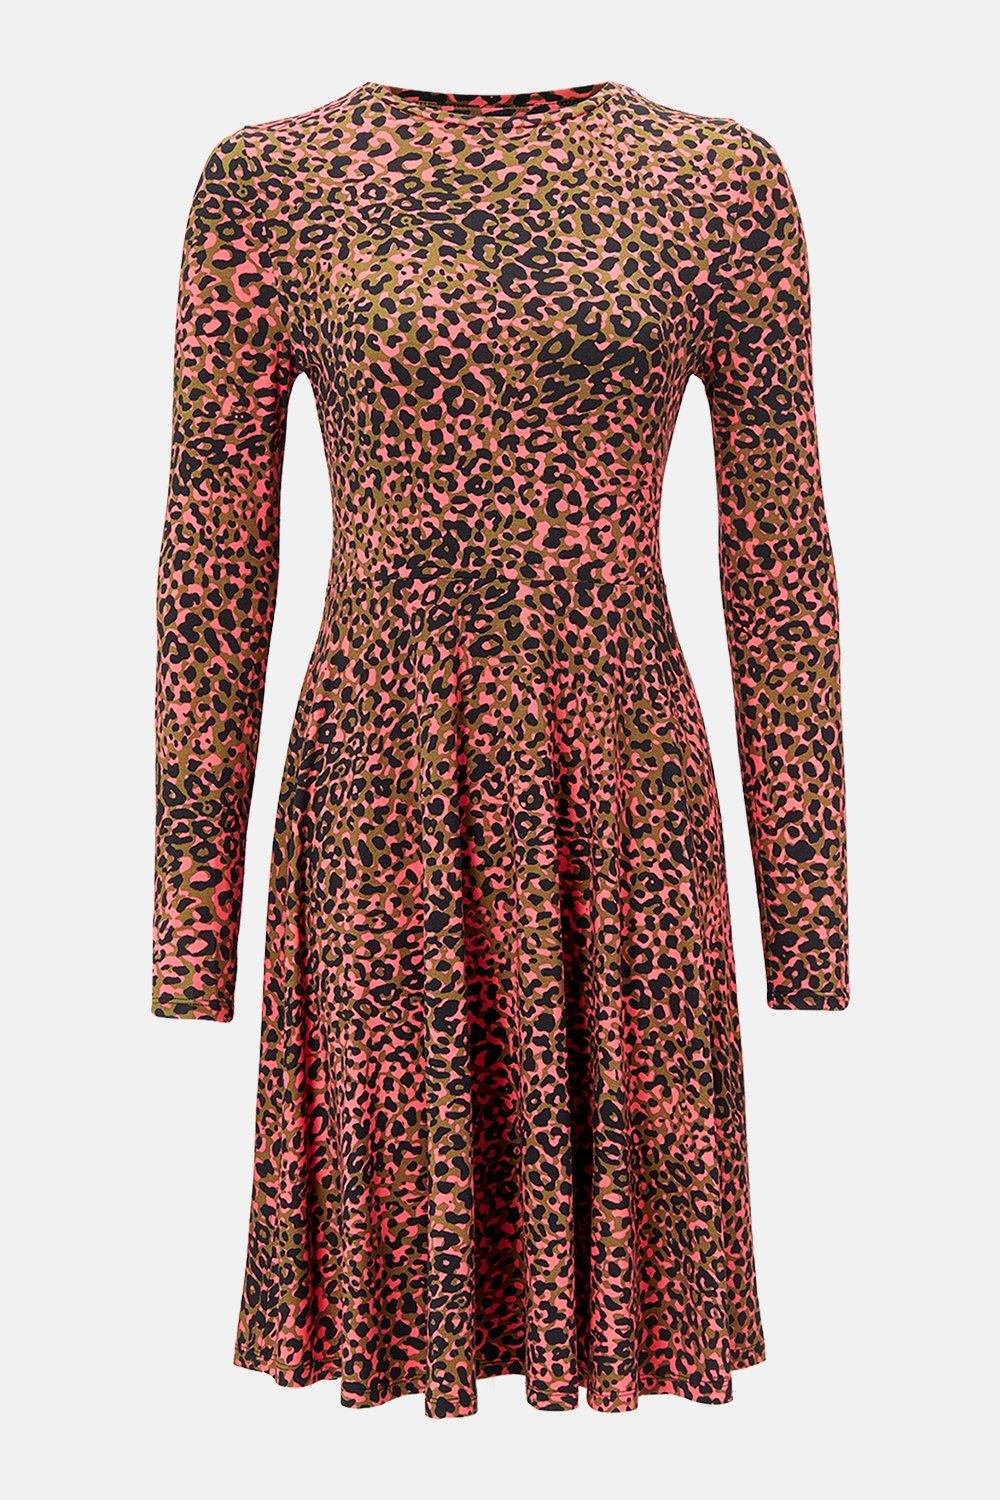 karen millen red leopard print dress